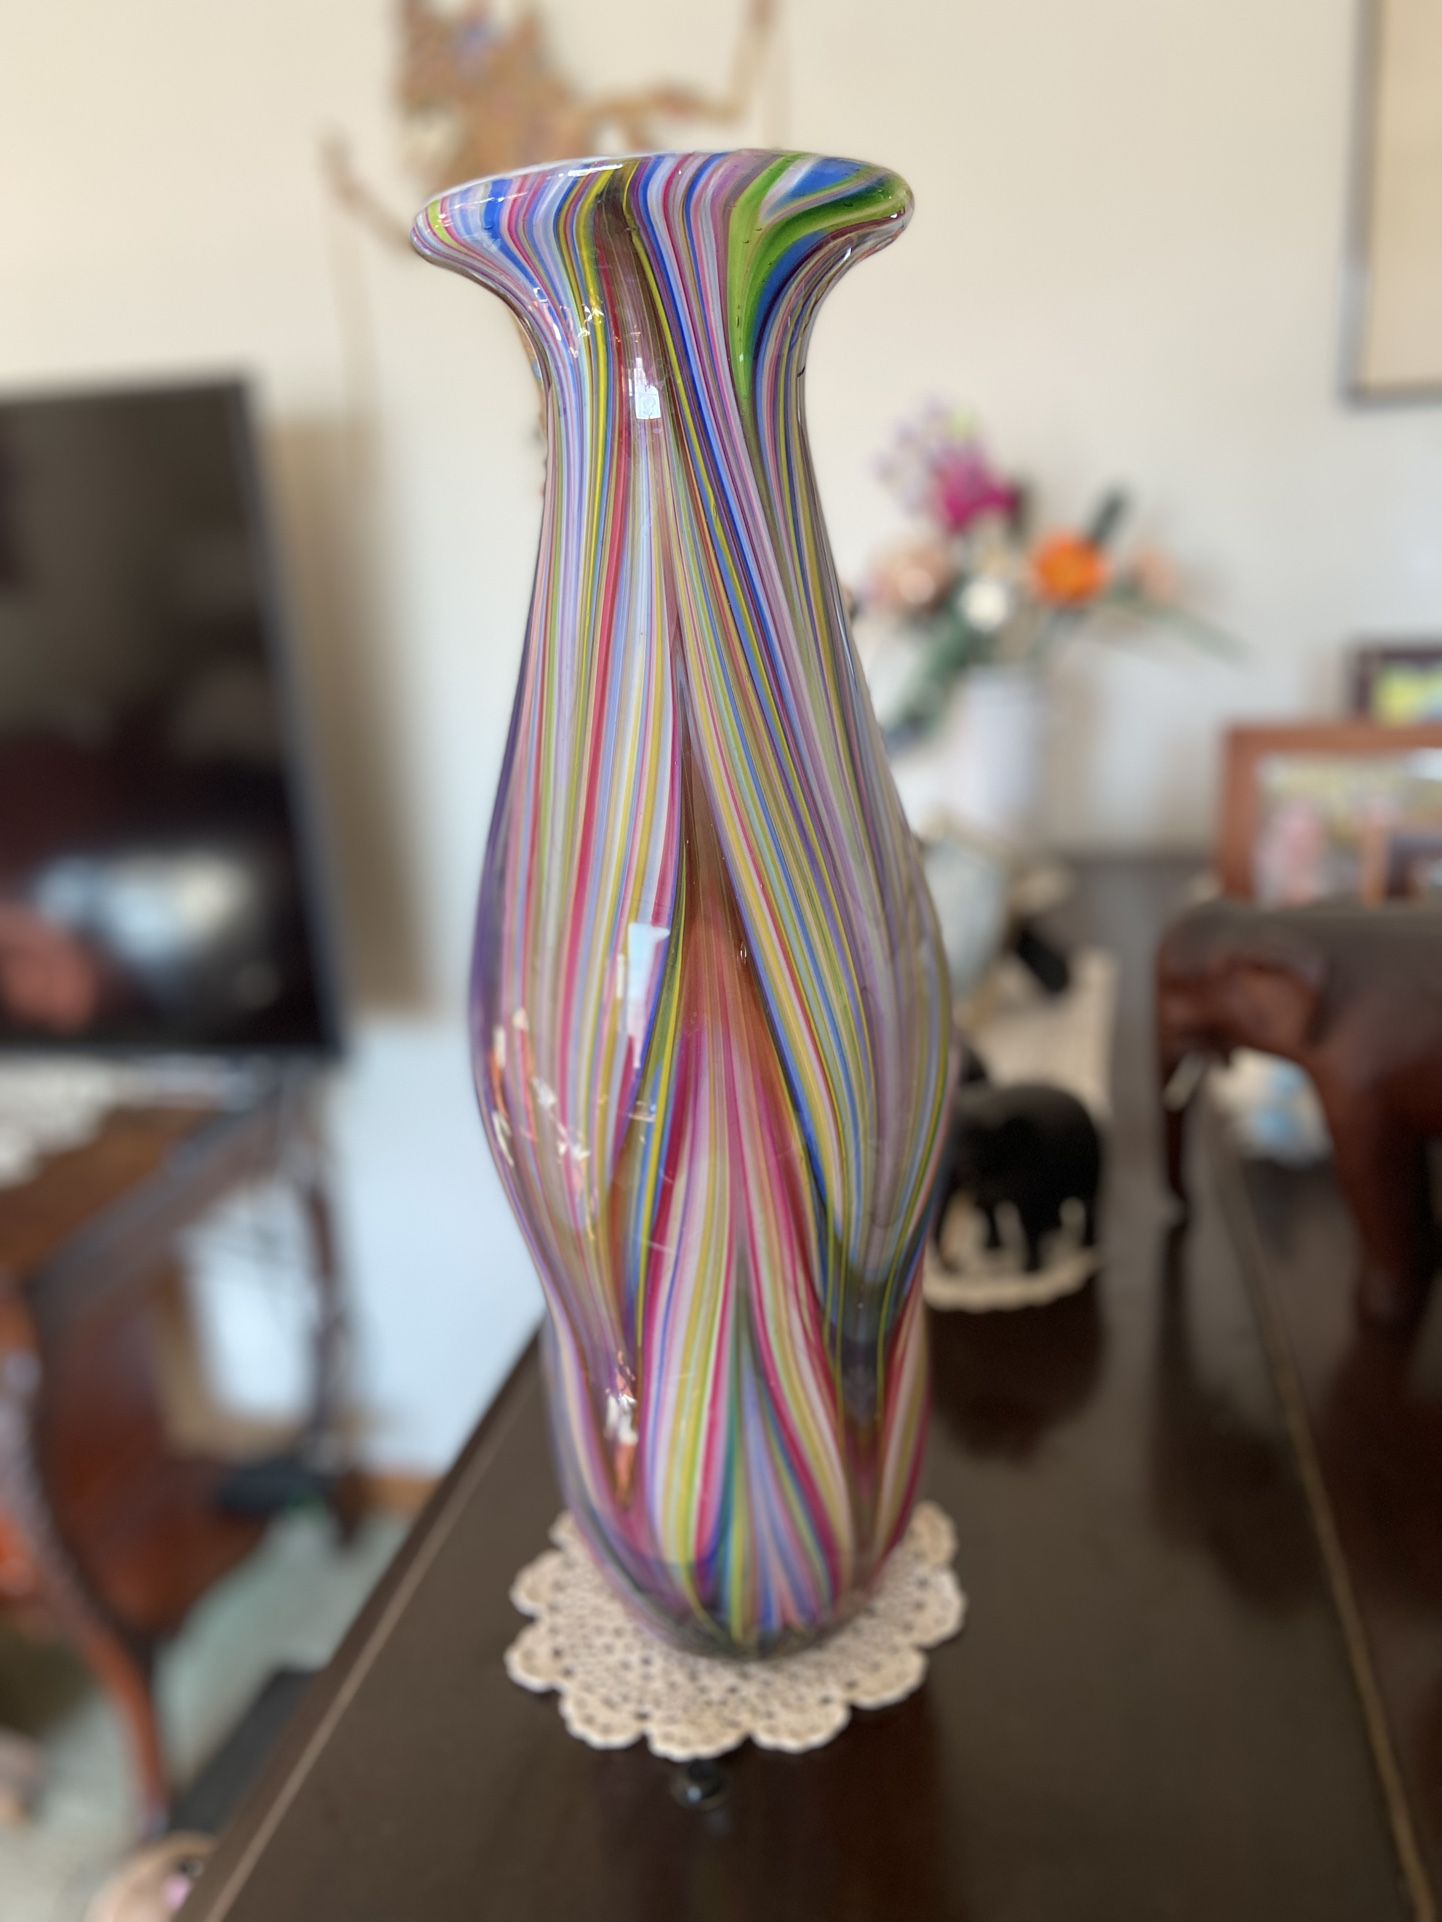 18” Mid-century Vintage Mutli-colored Striped Studio Art Glass Vase